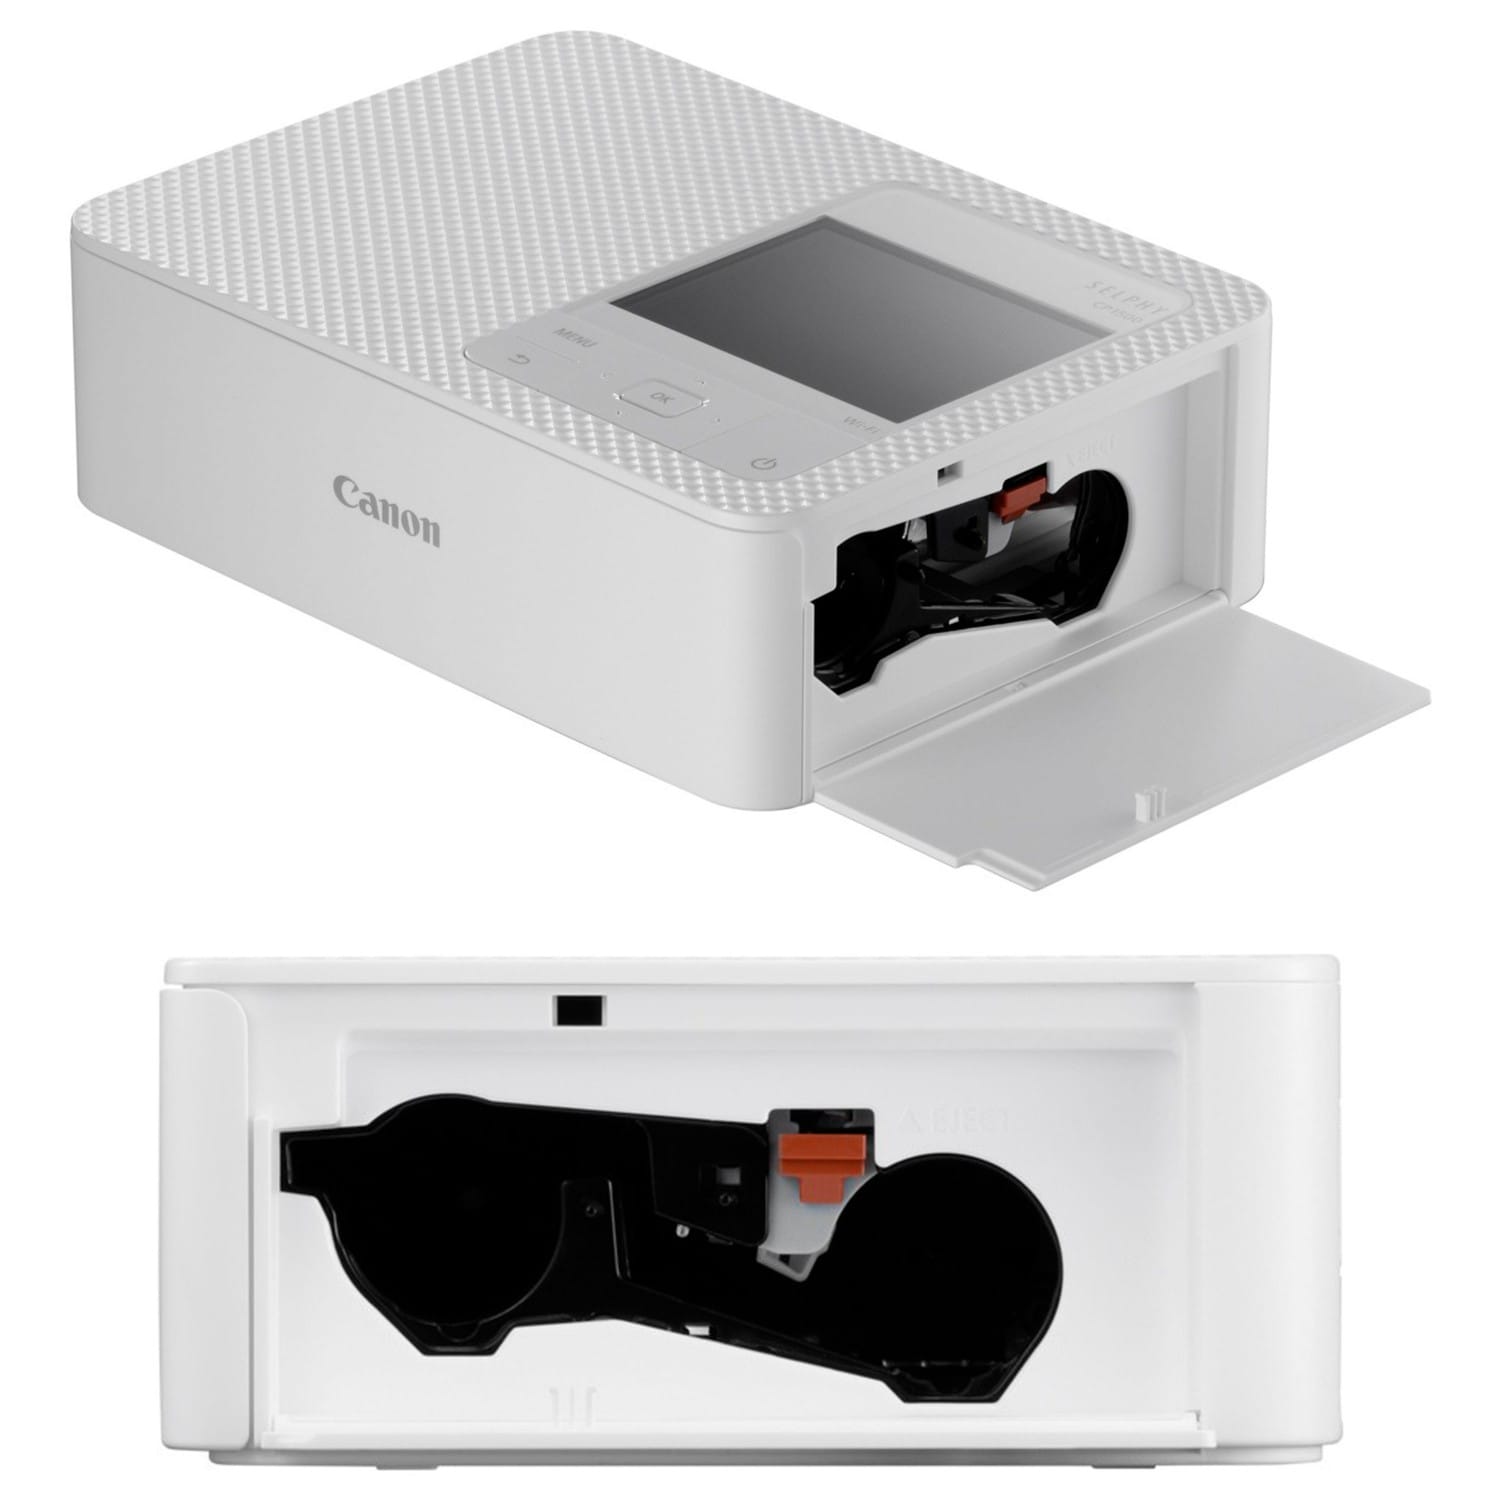 CANON - Imprimante thermique Selphy CP1500 blanche - Tirages 10x15cm -  Ecran LCD fixe de 8,9cm - Impression Wifi direct Smartphone